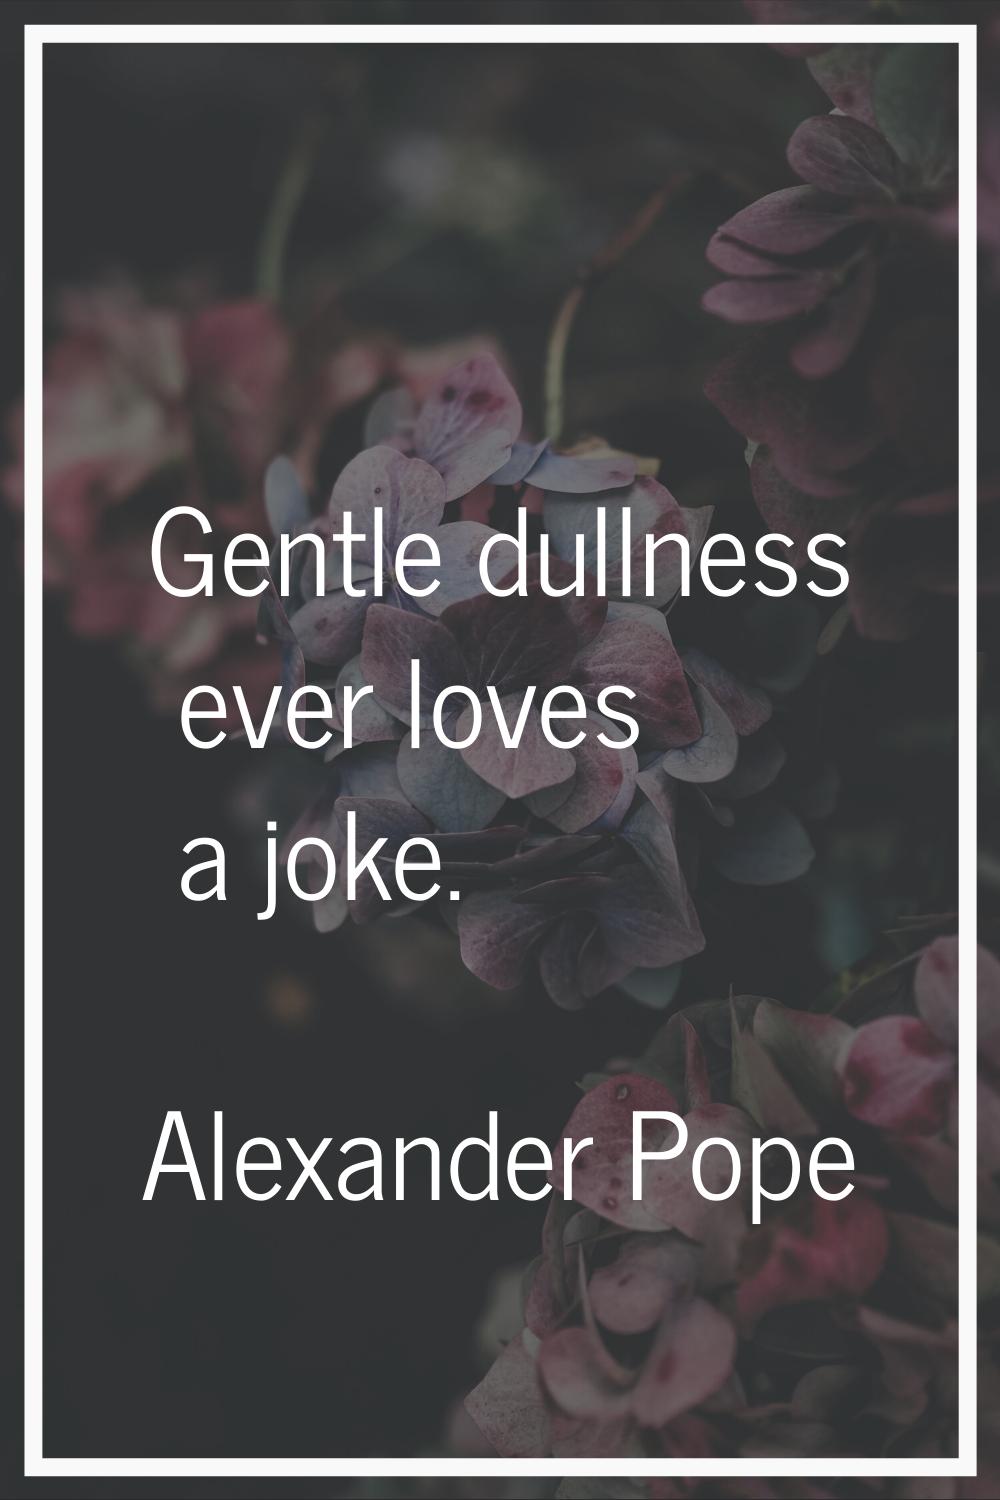 Gentle dullness ever loves a joke.